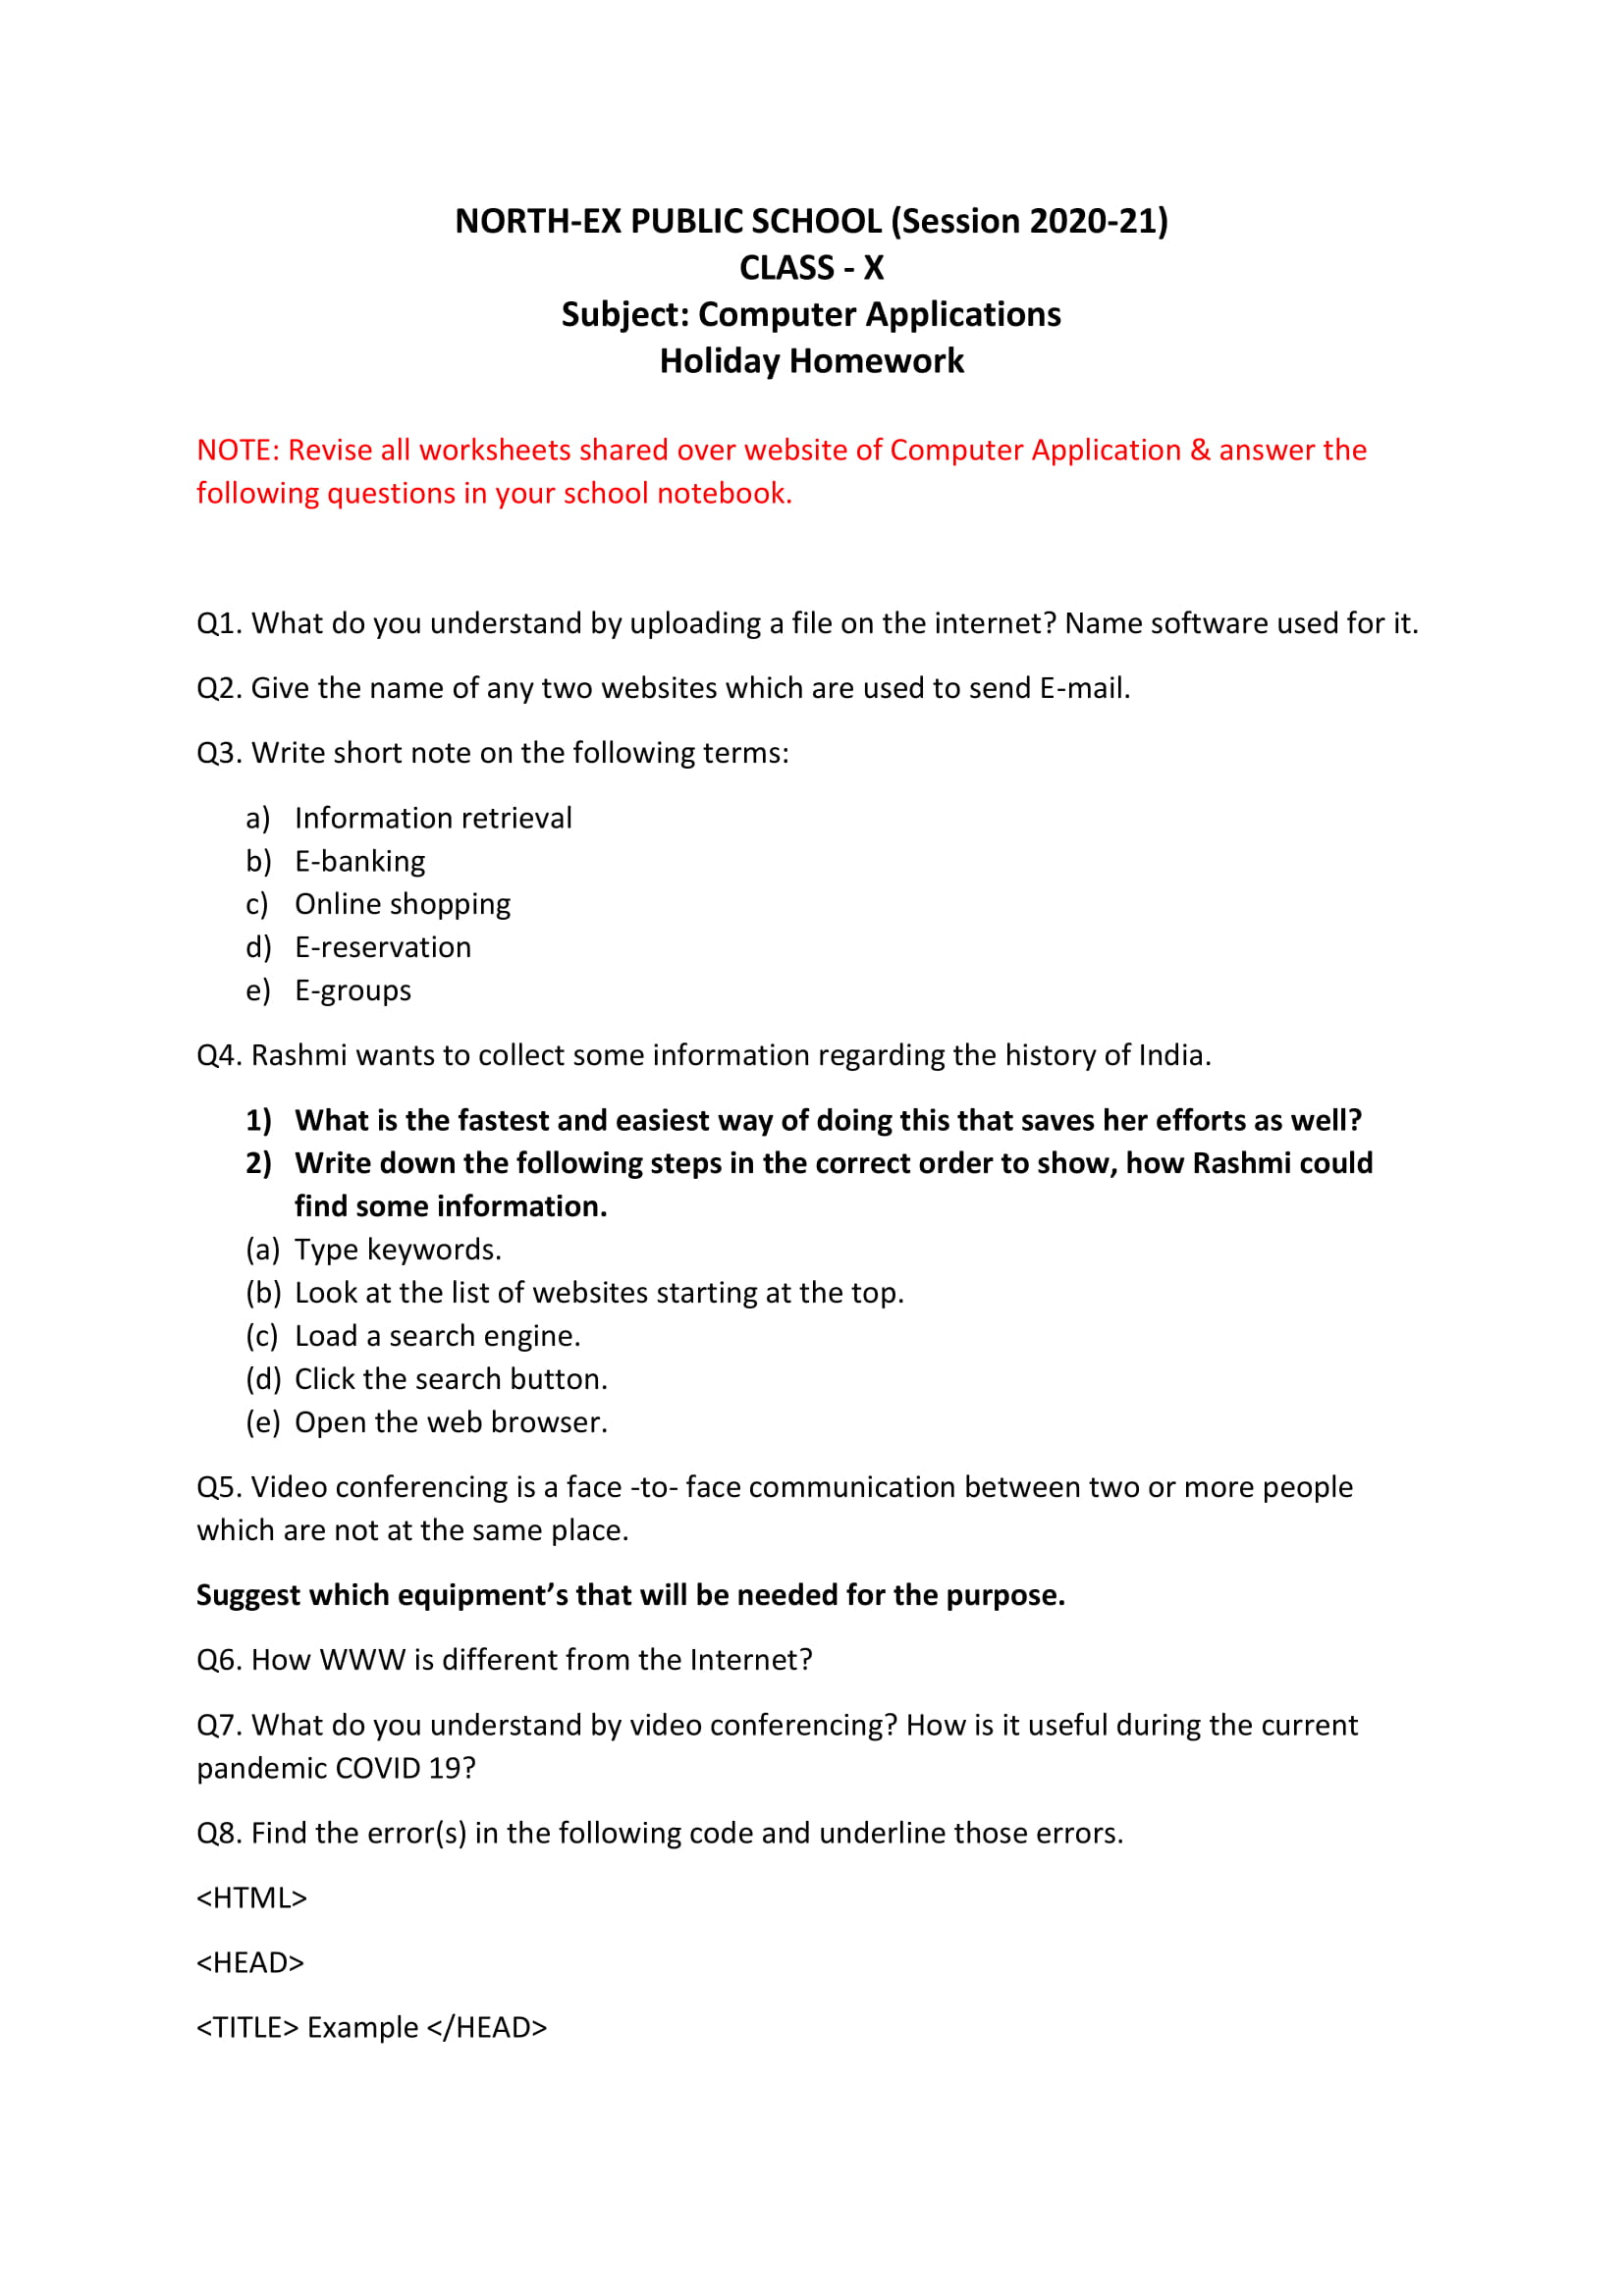 class 10 holiday homework english